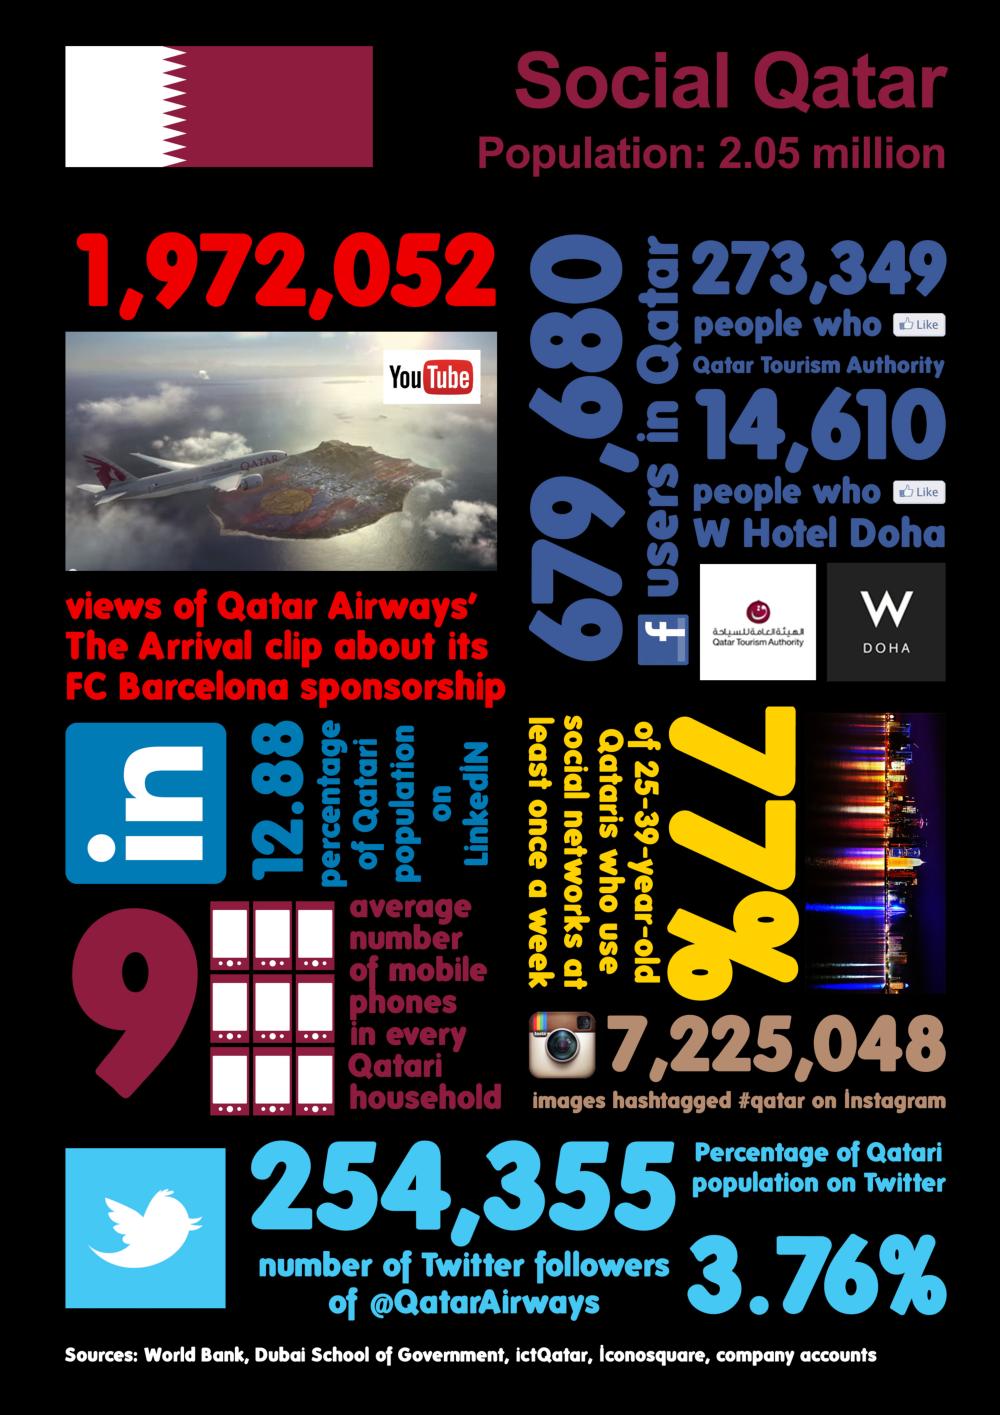 Social Qatar in Numbers